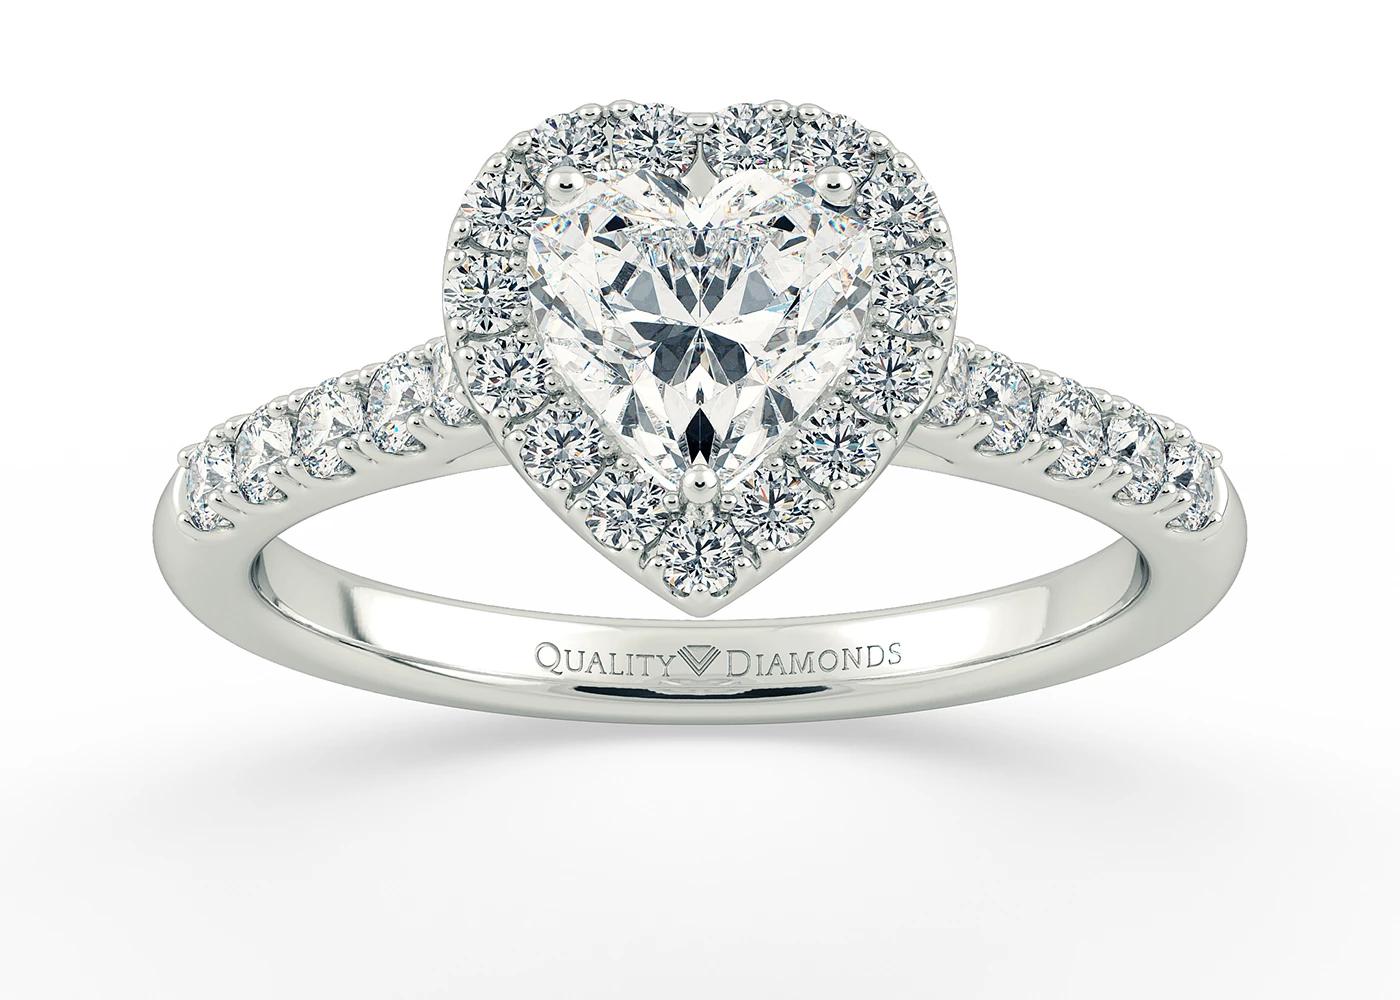 Half Carat Heart Halo Diamond Ring in Platinum 950